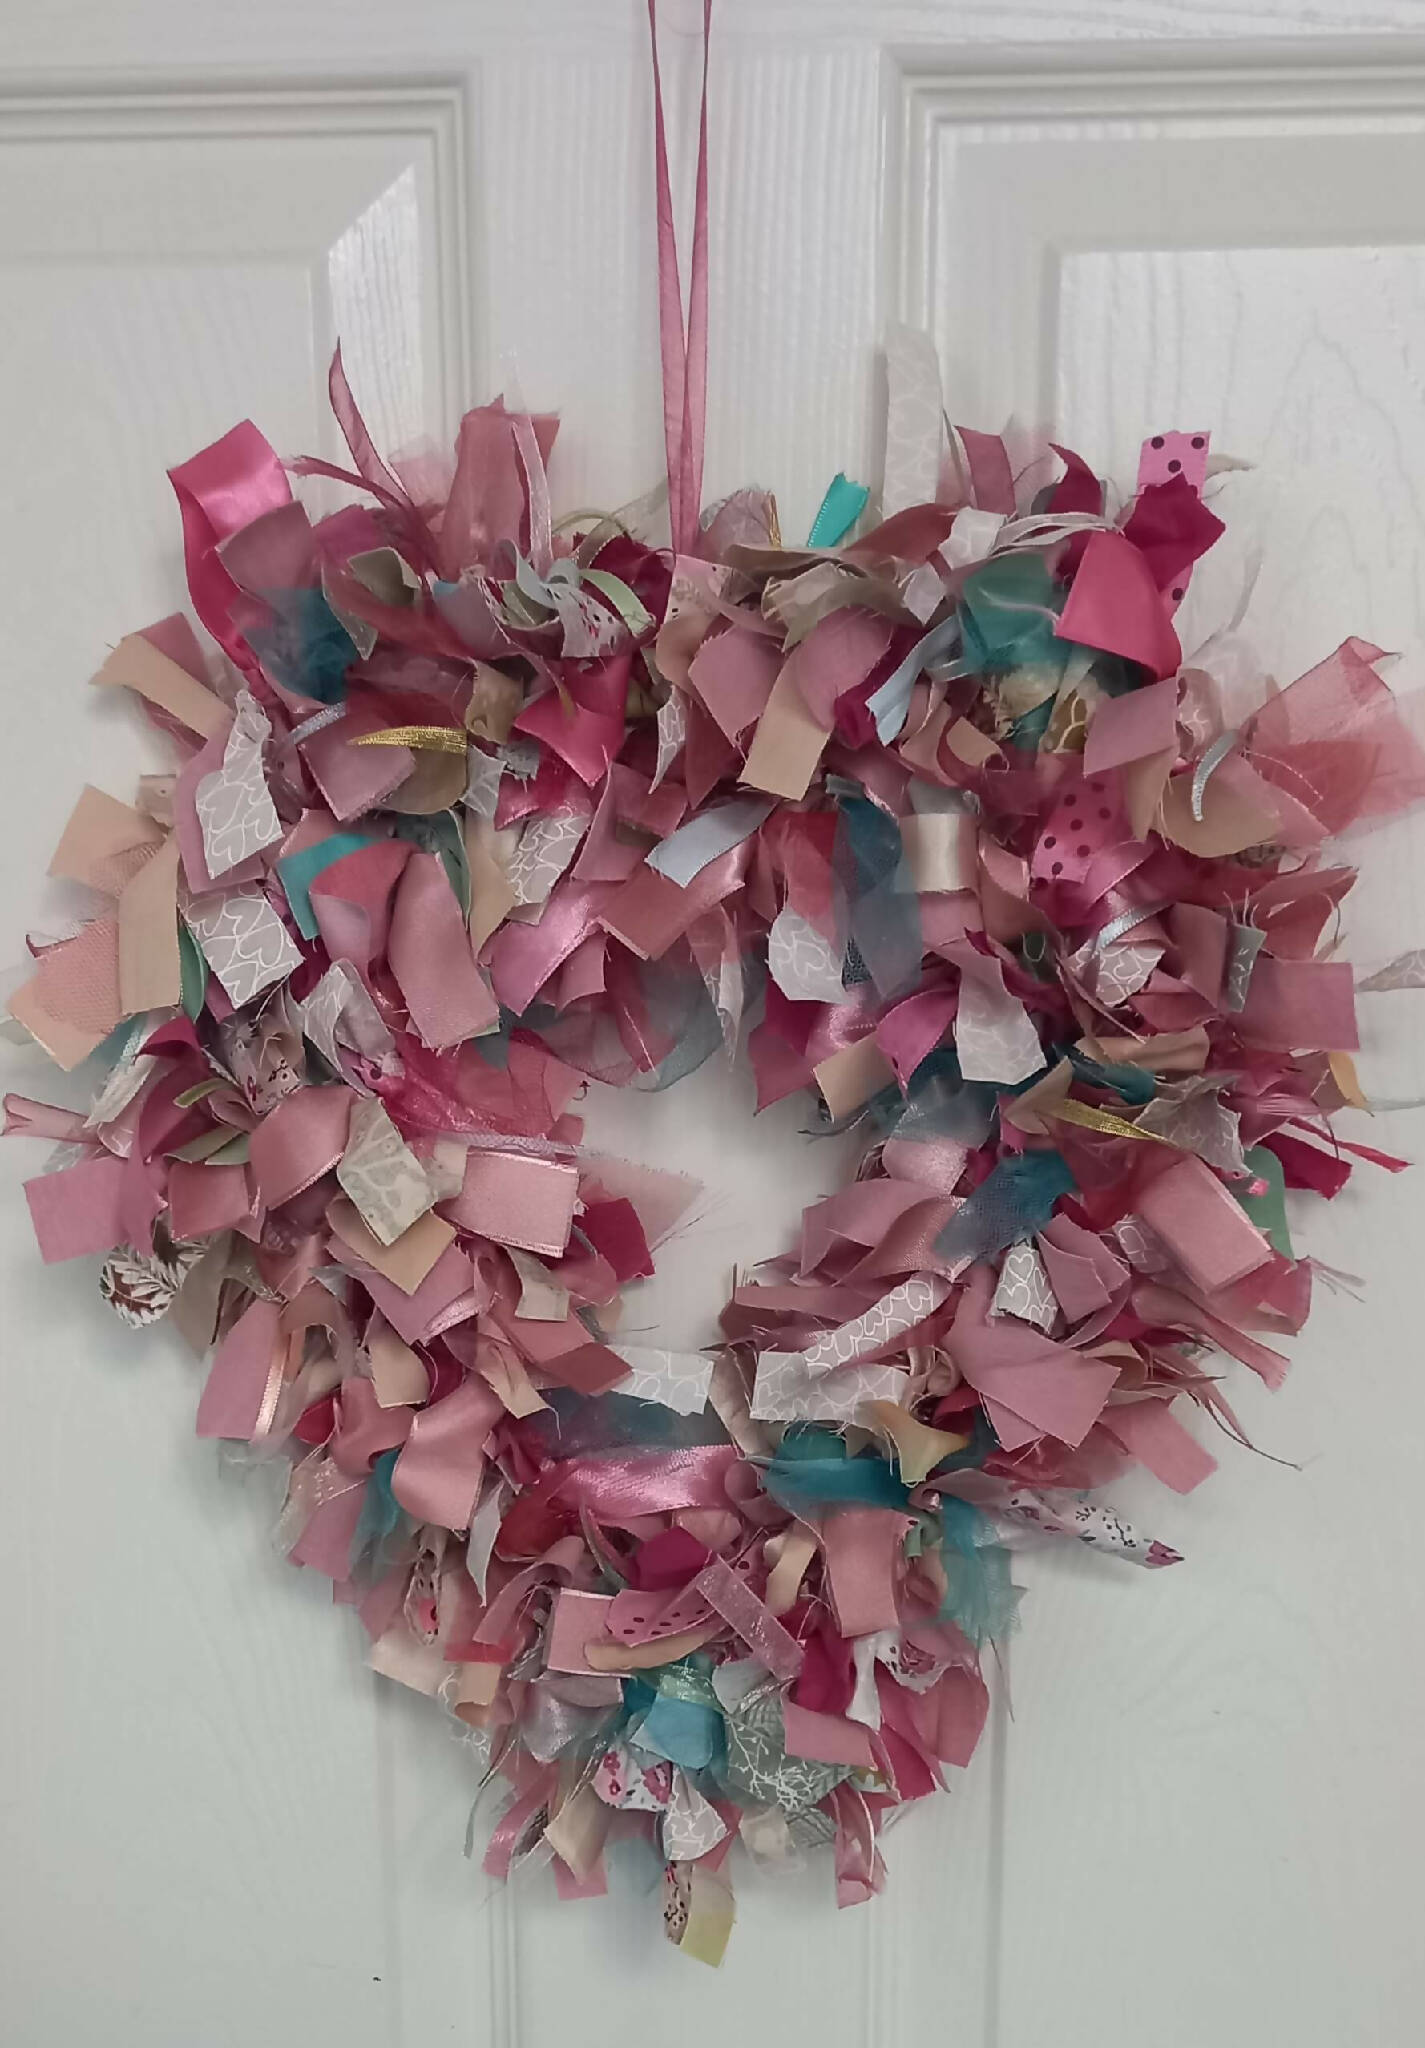 Blushing Heart Wreath Kit  Heart wreath, Shabby chic diy crafts